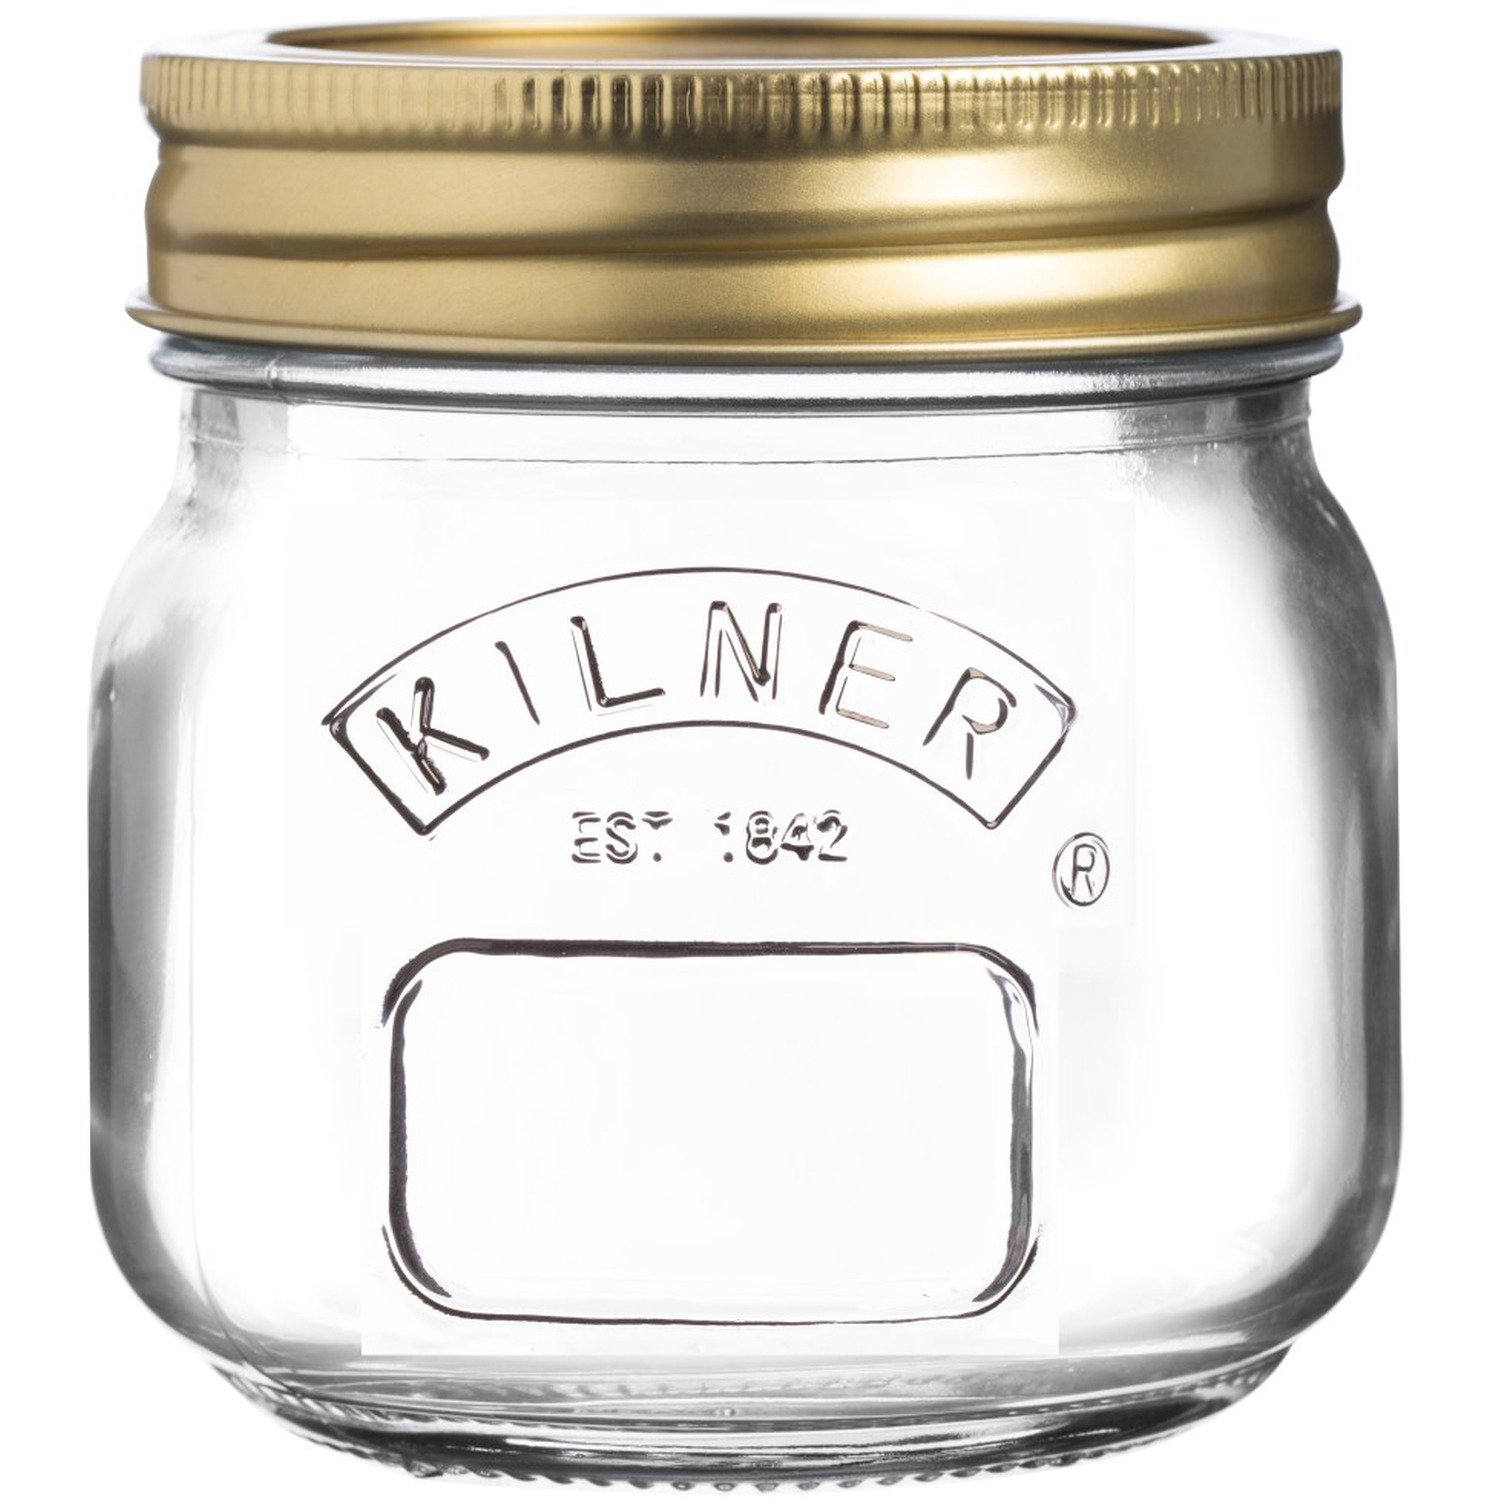 Kilner 250ml Round Storage Jar with Screw Top Lid Image